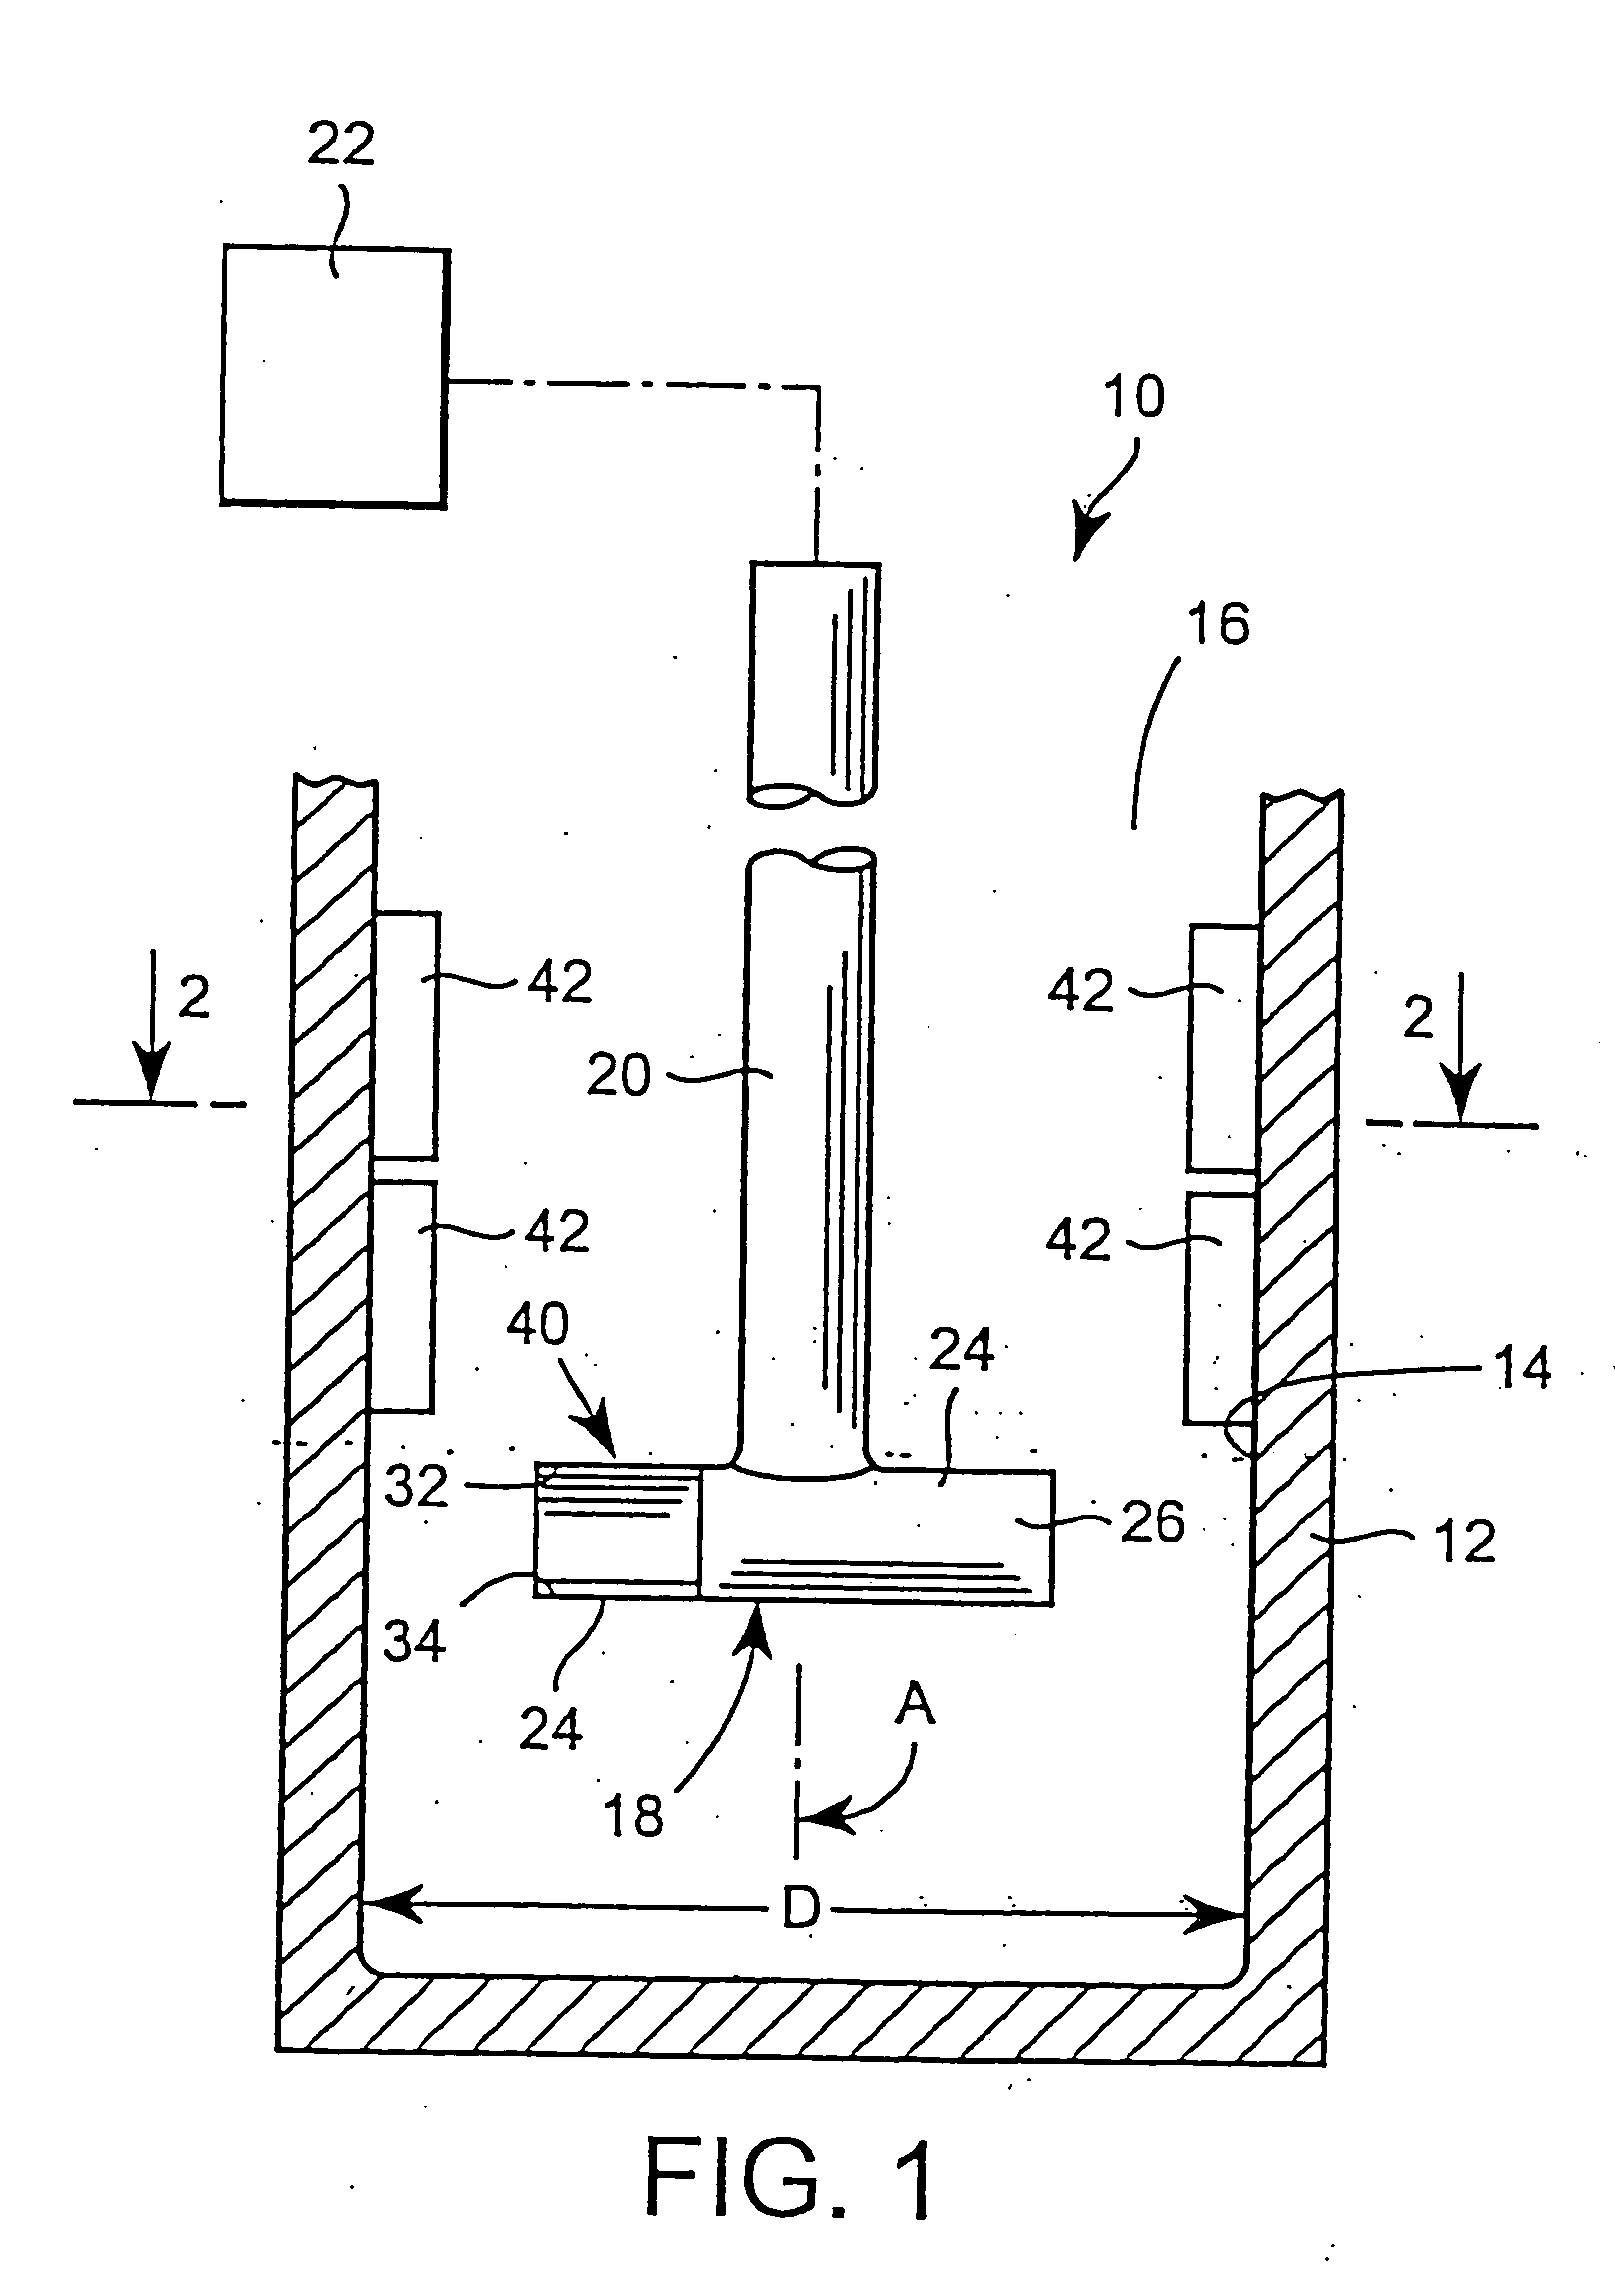 Process and apparatus for making a sheet of aramid fibers using a foamed medium